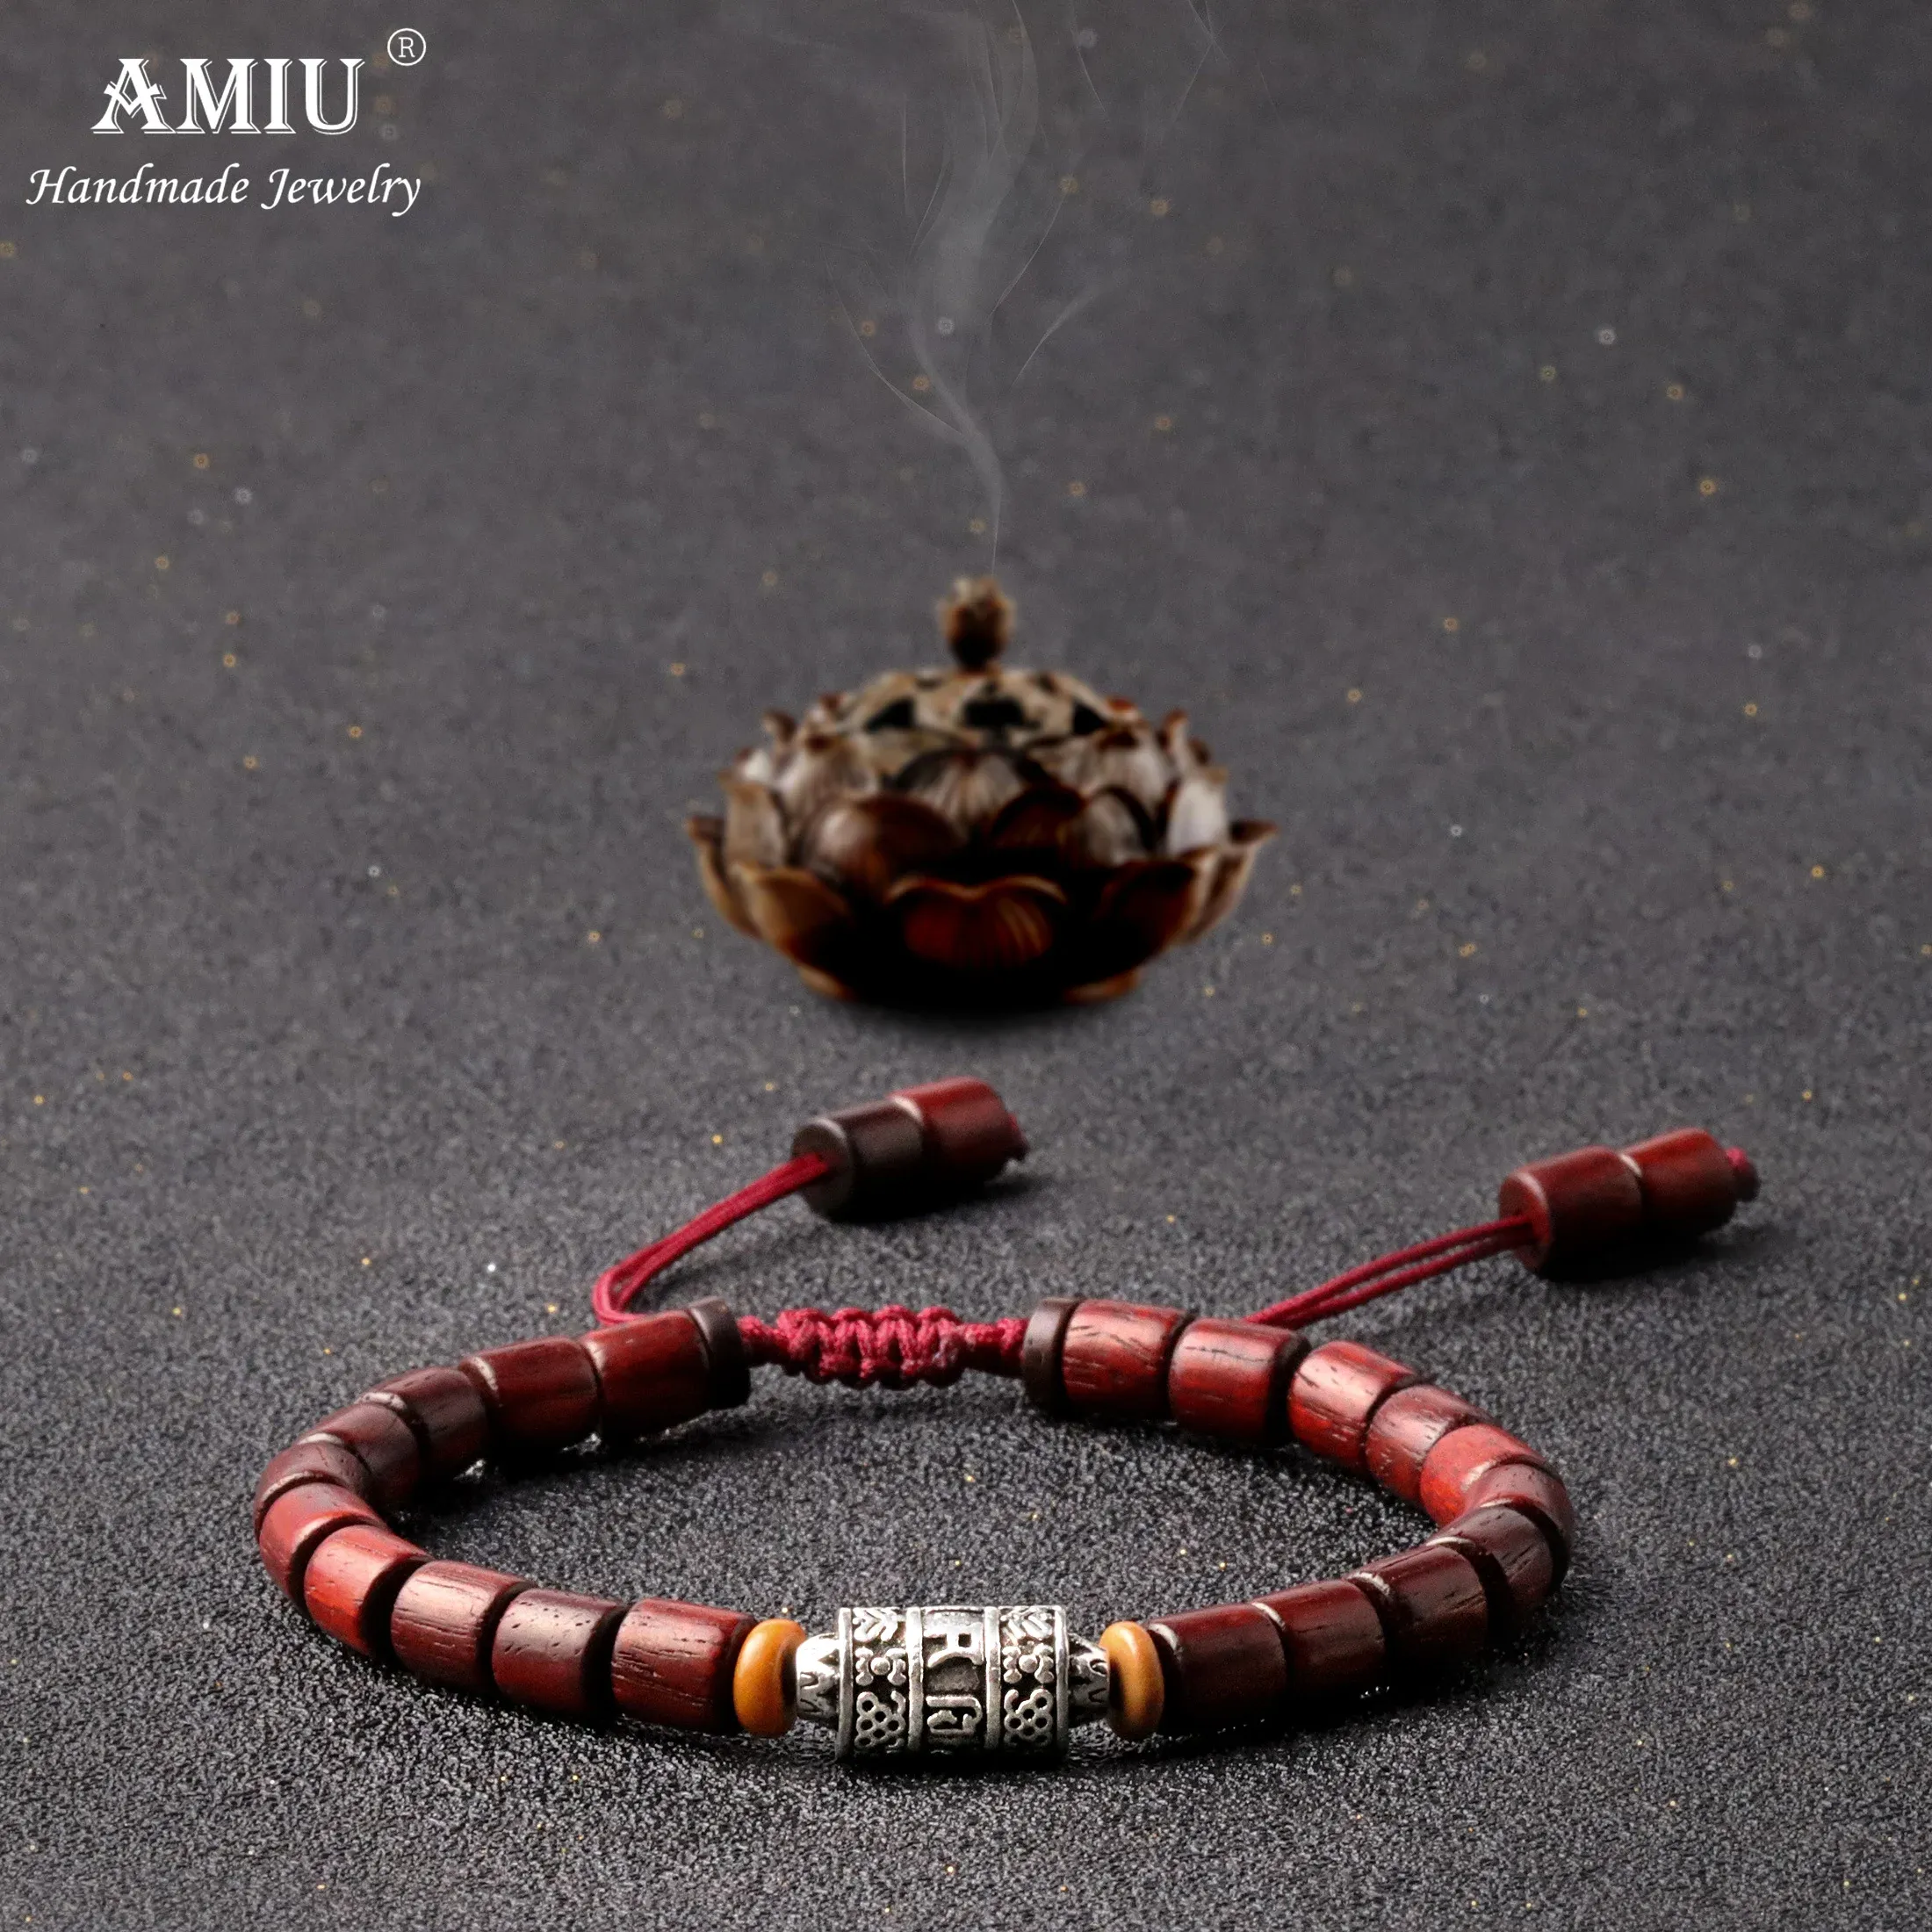 Strands AMIU Handmade Tibetan Prayer Wheel Bead Bracelet Tibetan Buddhist Mantra Sign Charm Natural Sanders Wood Mala Beads Bracelet